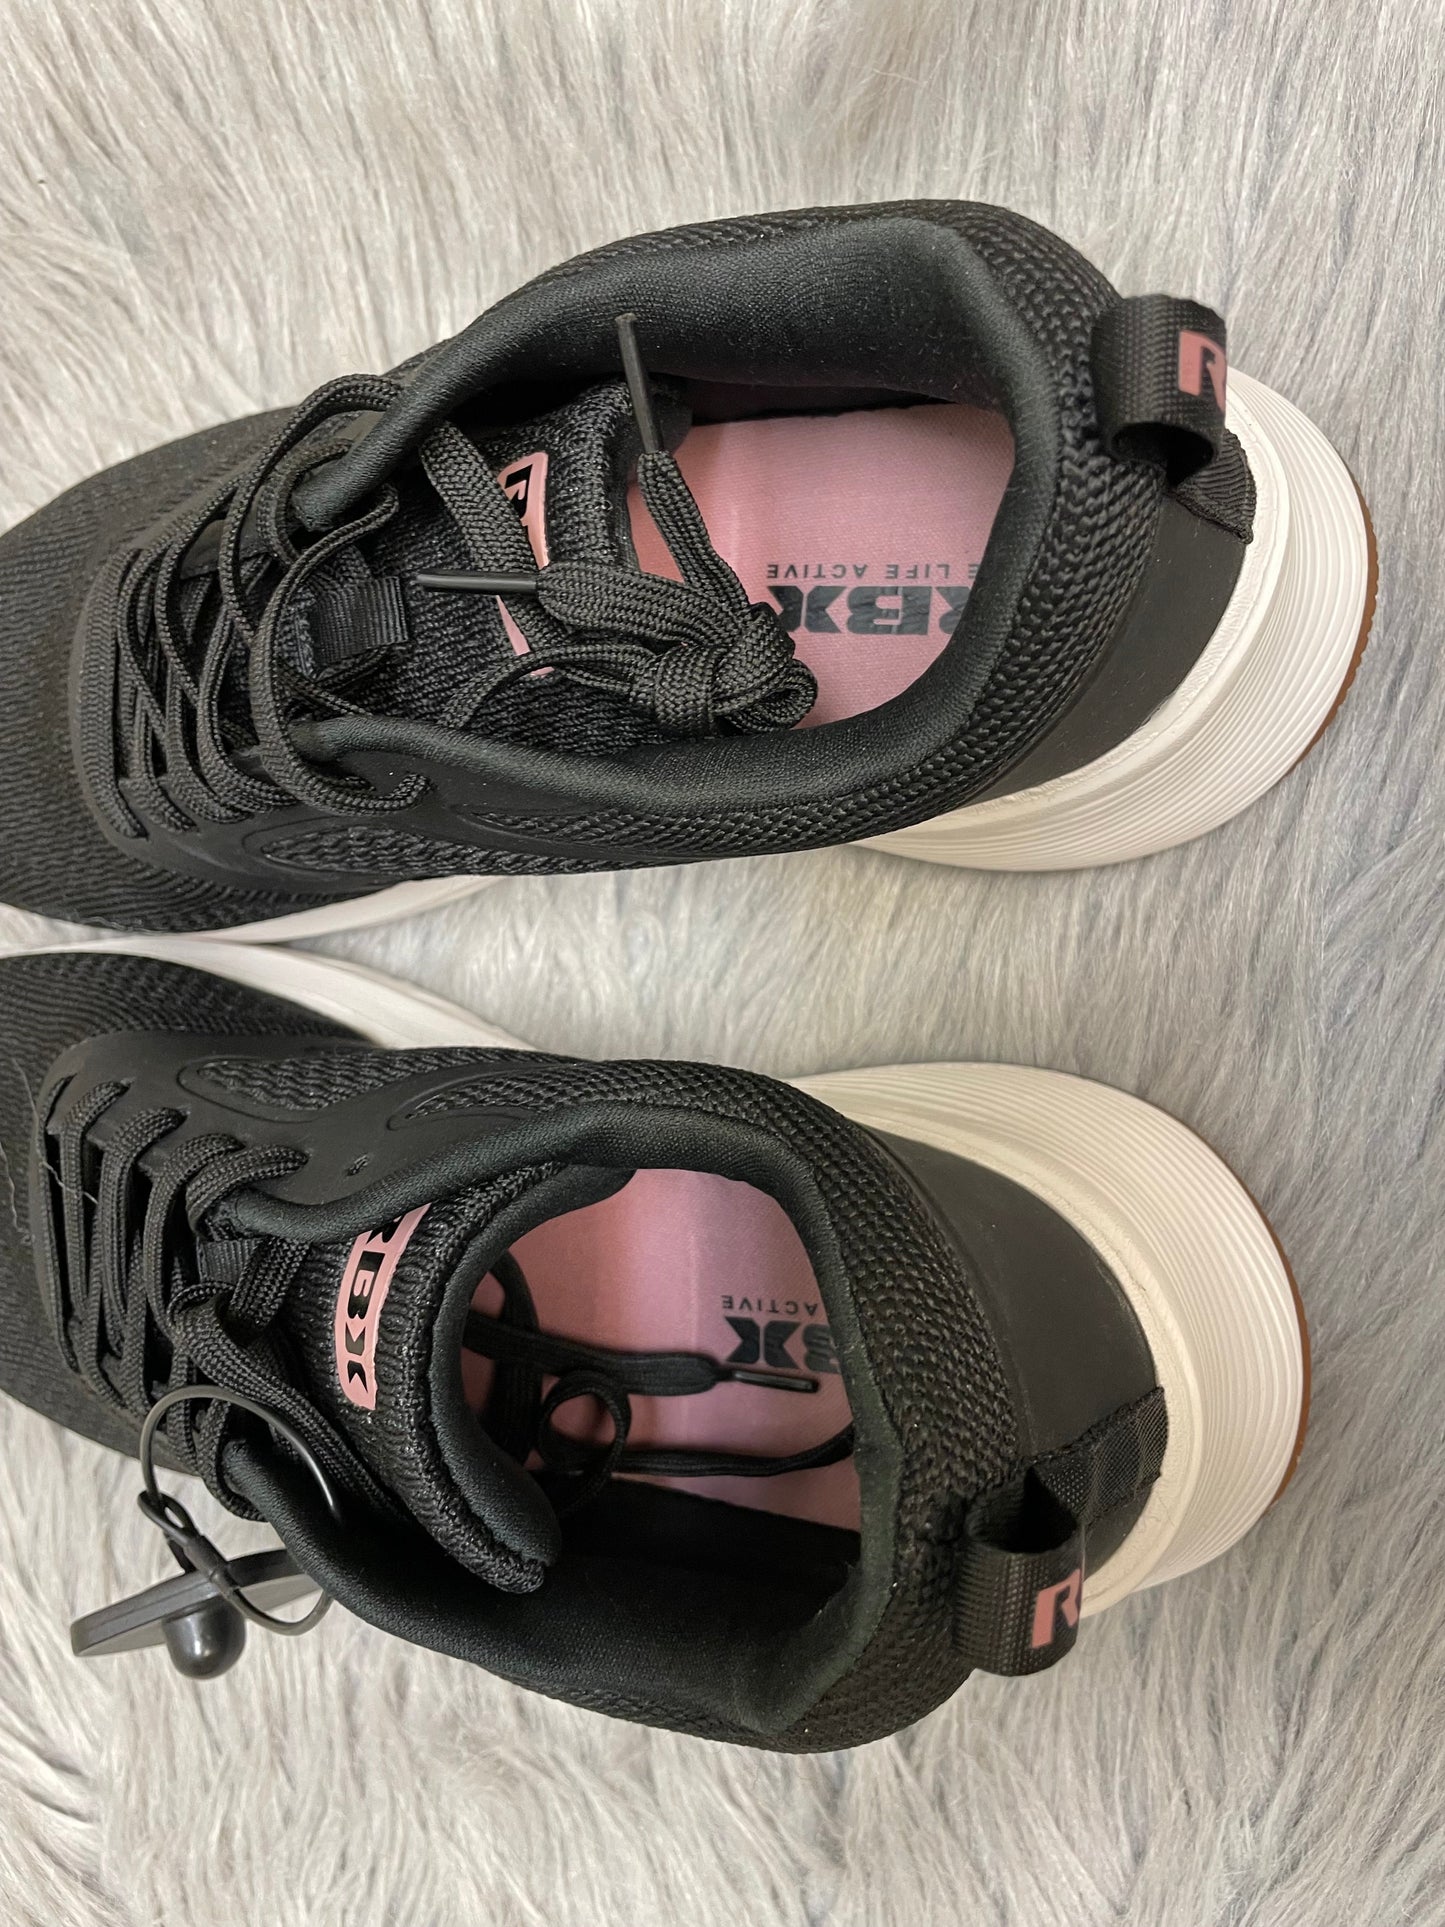 Black Shoes Athletic Rbx, Size 9